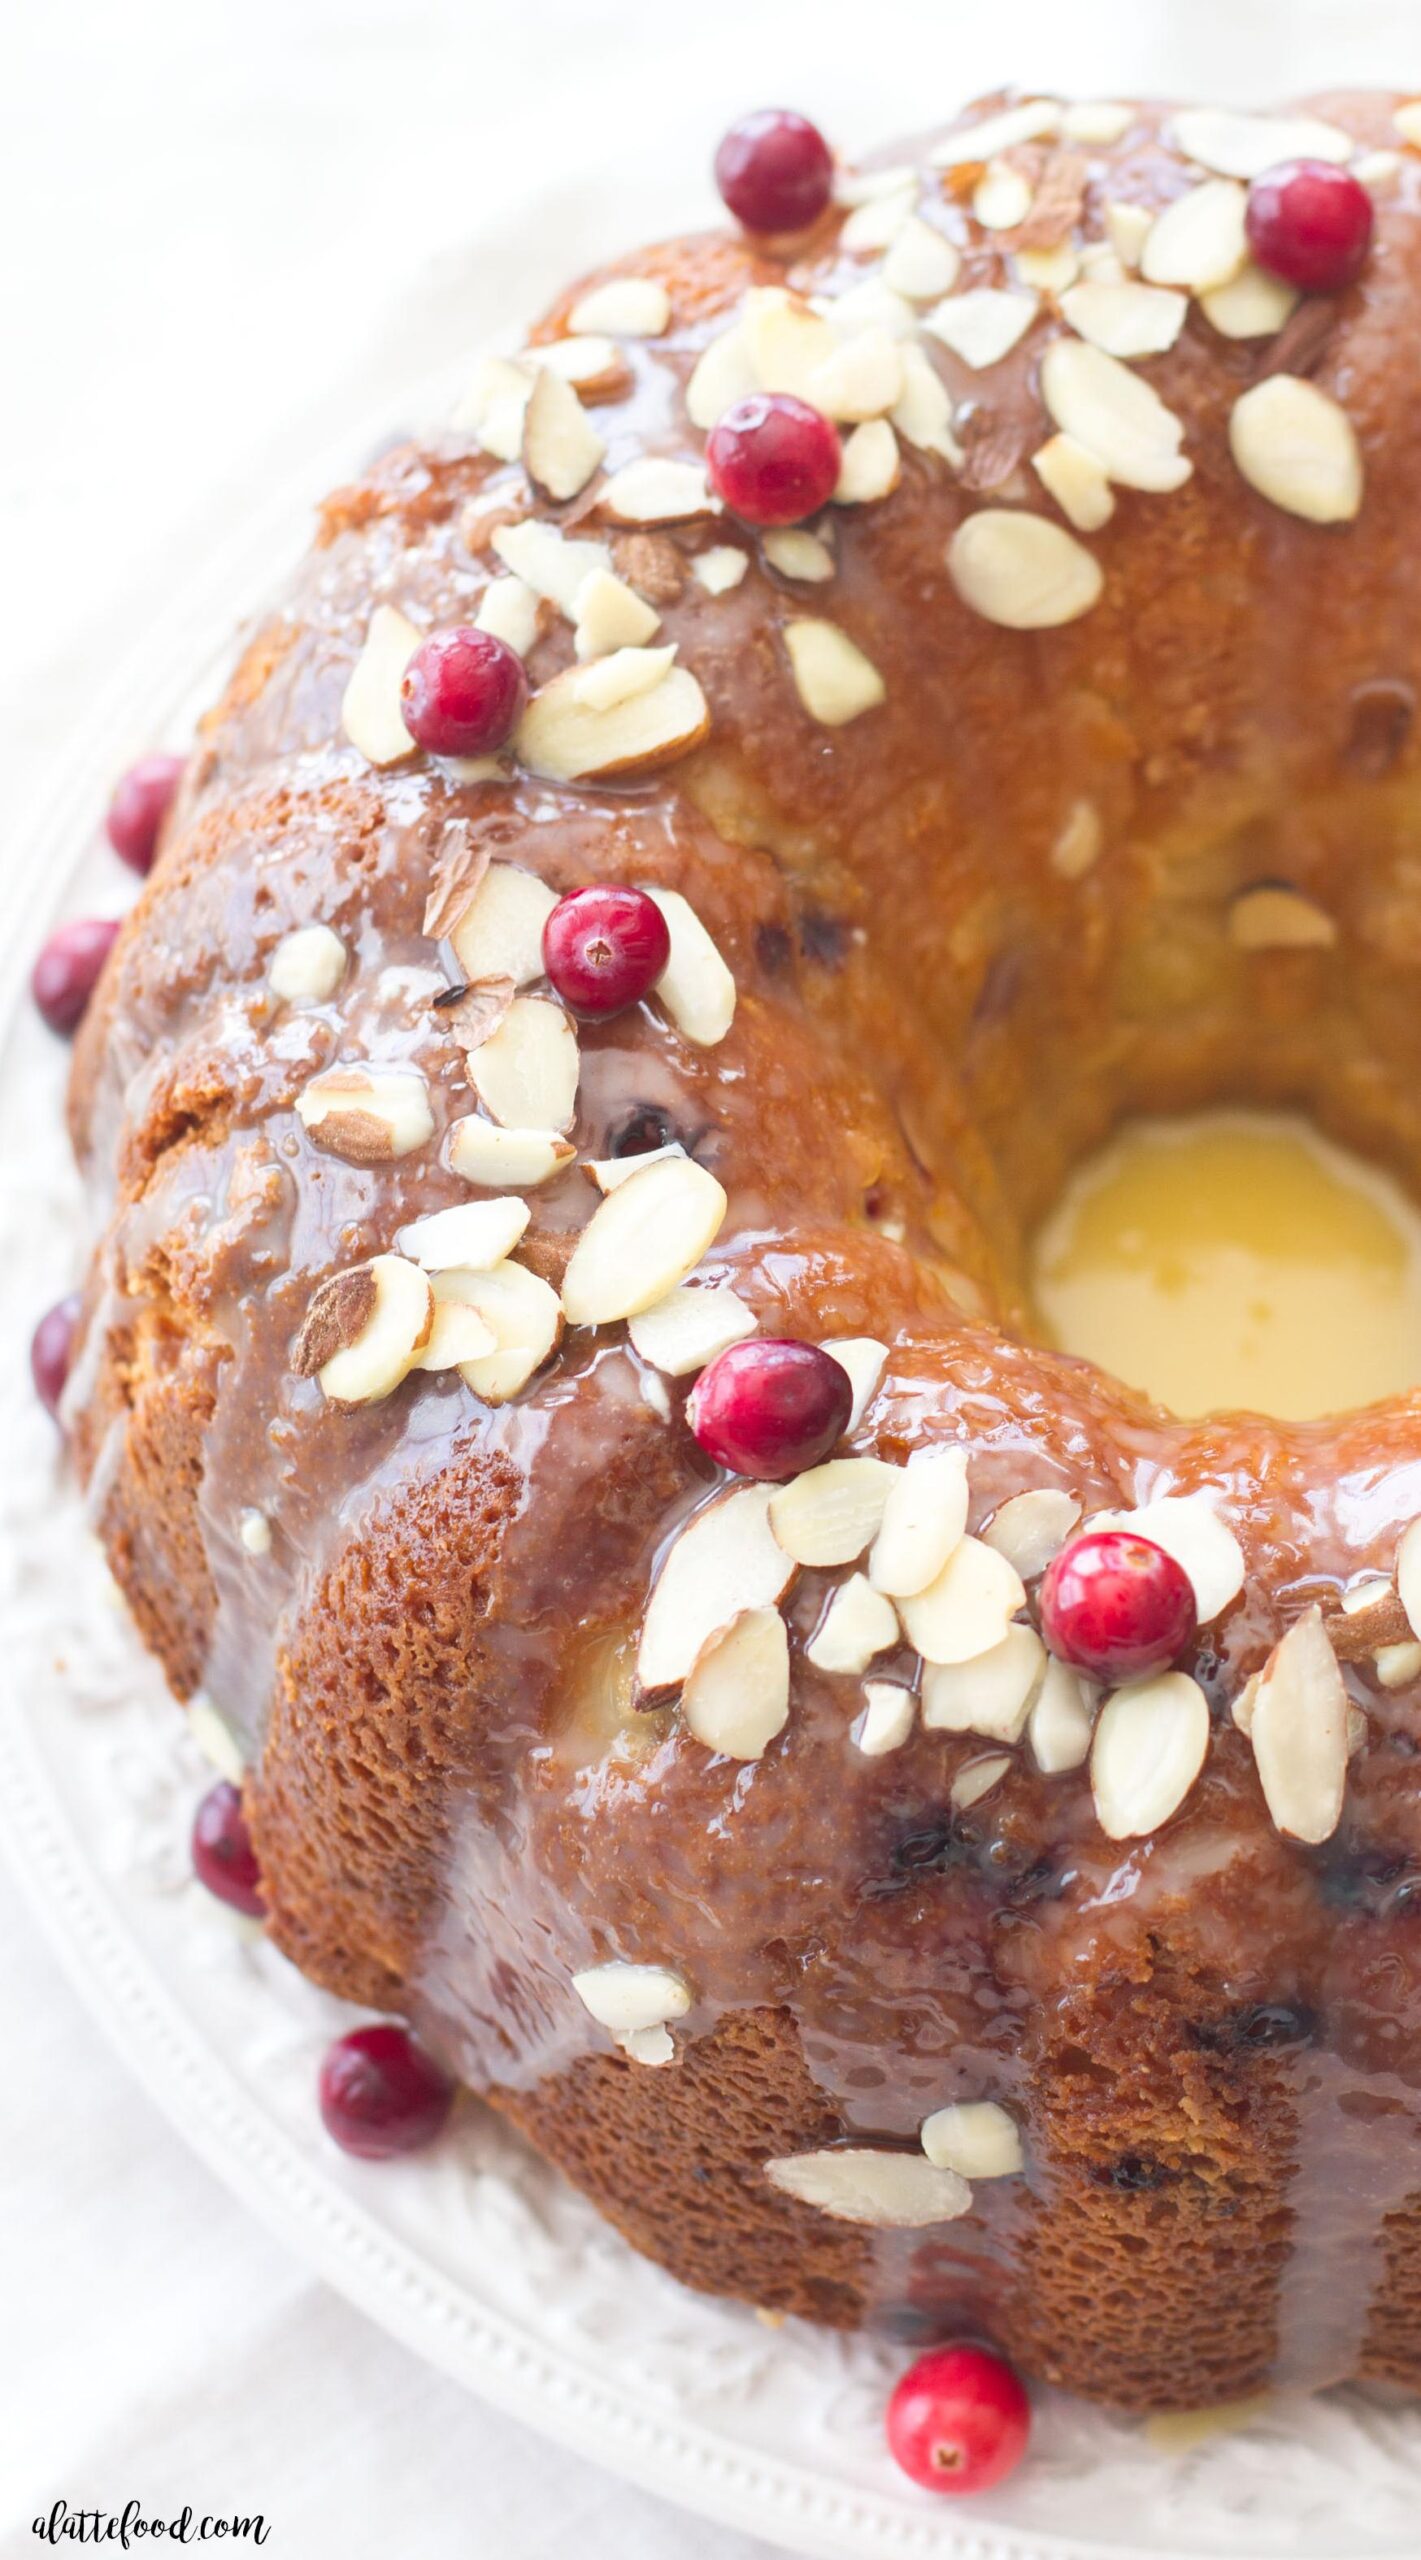  Celebrate the season with a warm slice of cranberry-almond pound cake.